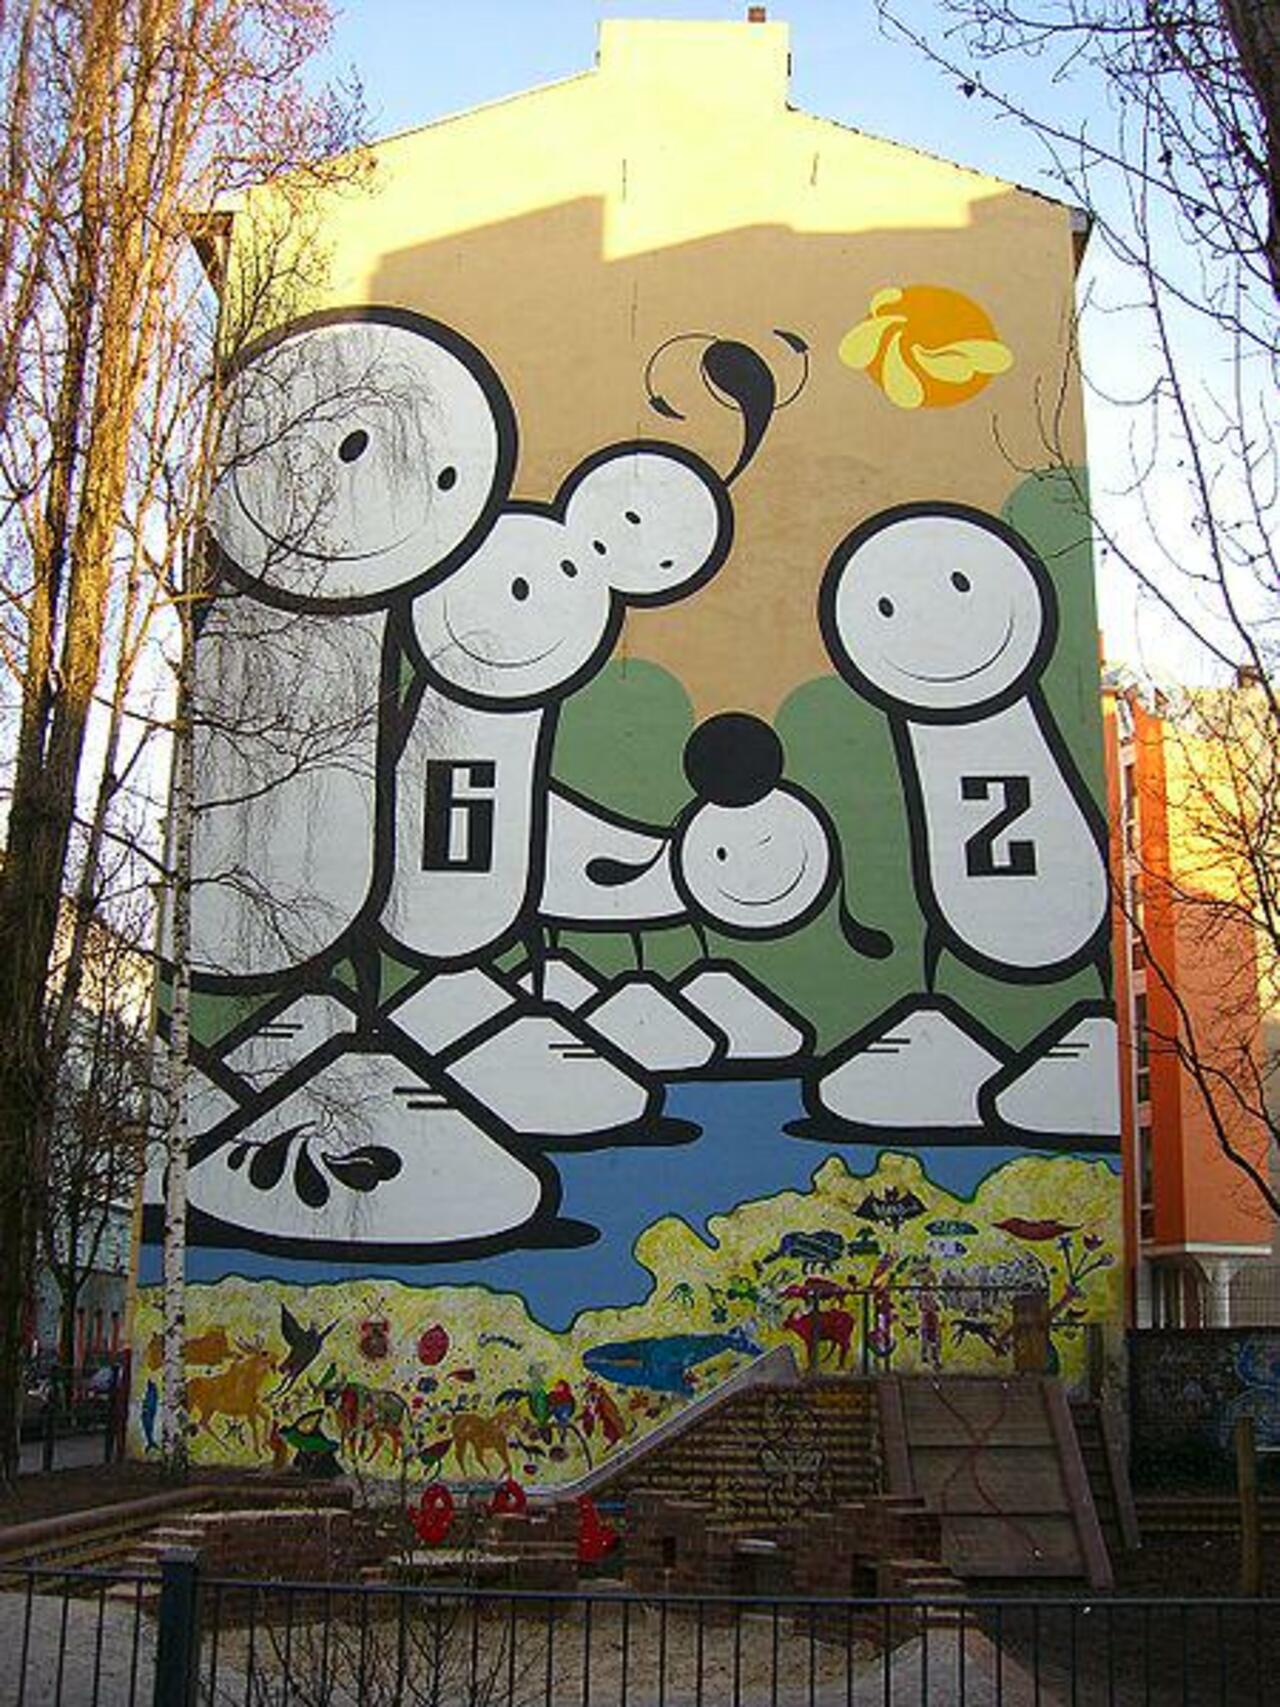 RT @Brindille_: #Streetart #urbanart #graffiti #mural #graphicdesign by #artist The London Police (duo) in Berlin http://t.co/yHoo8dXOSR